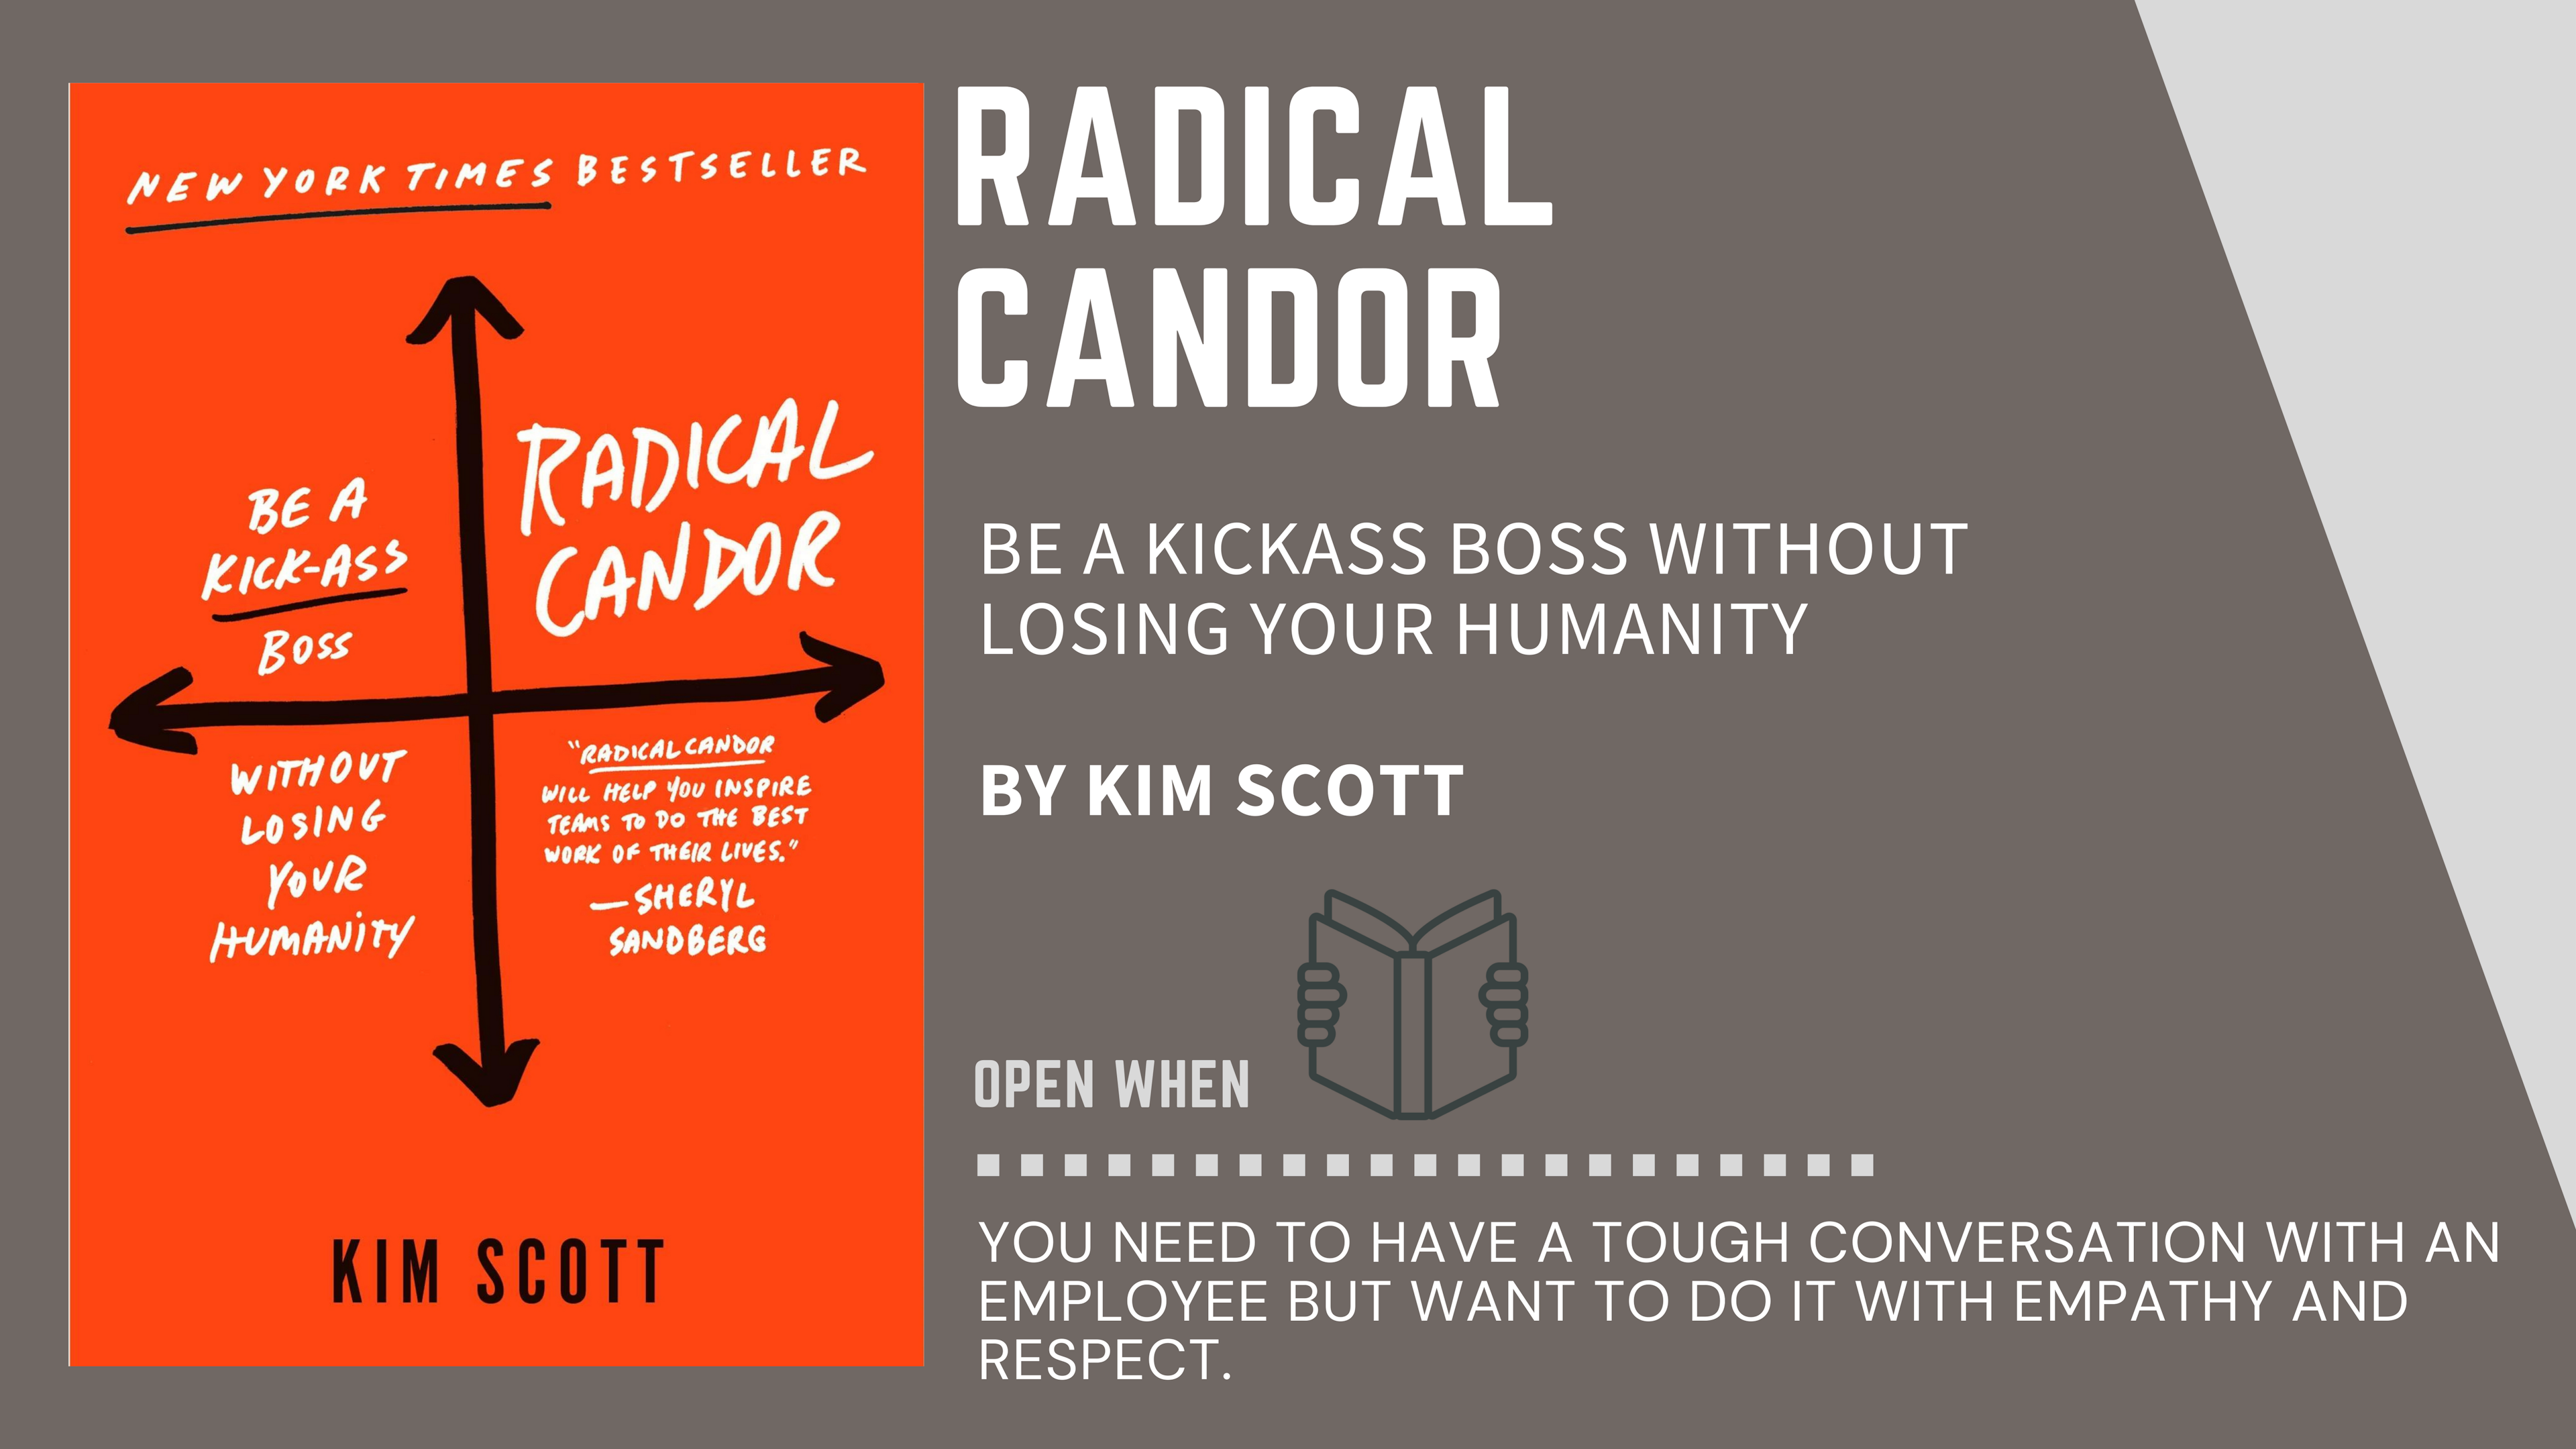 Book Cover of "Radical Candor" by Kim Scott